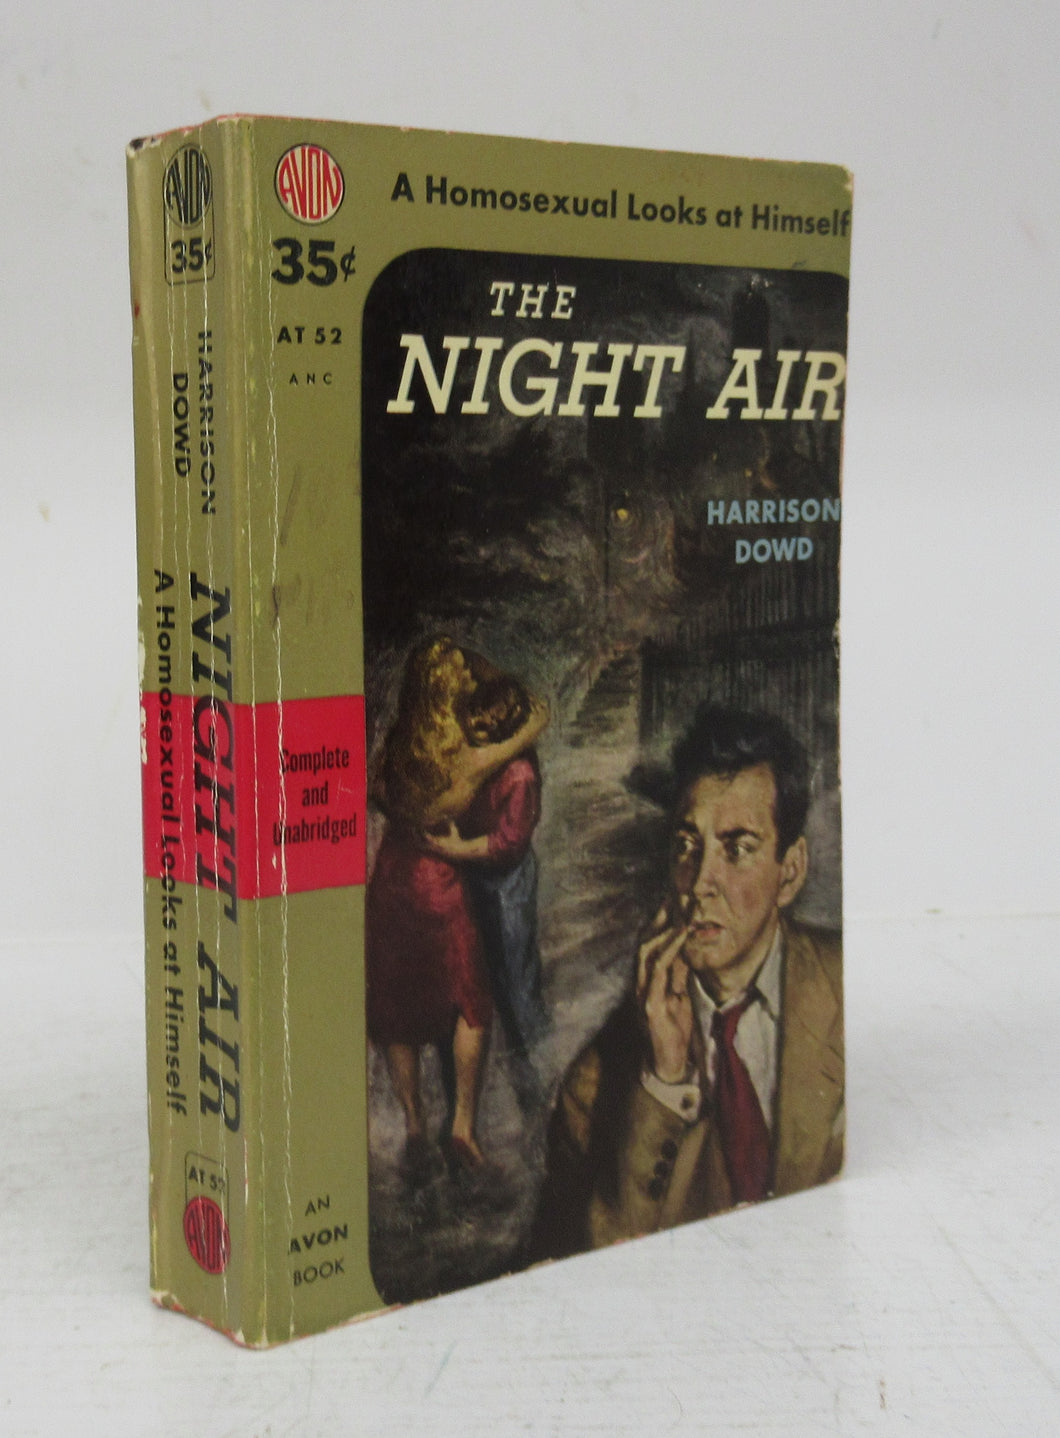 The Night Air